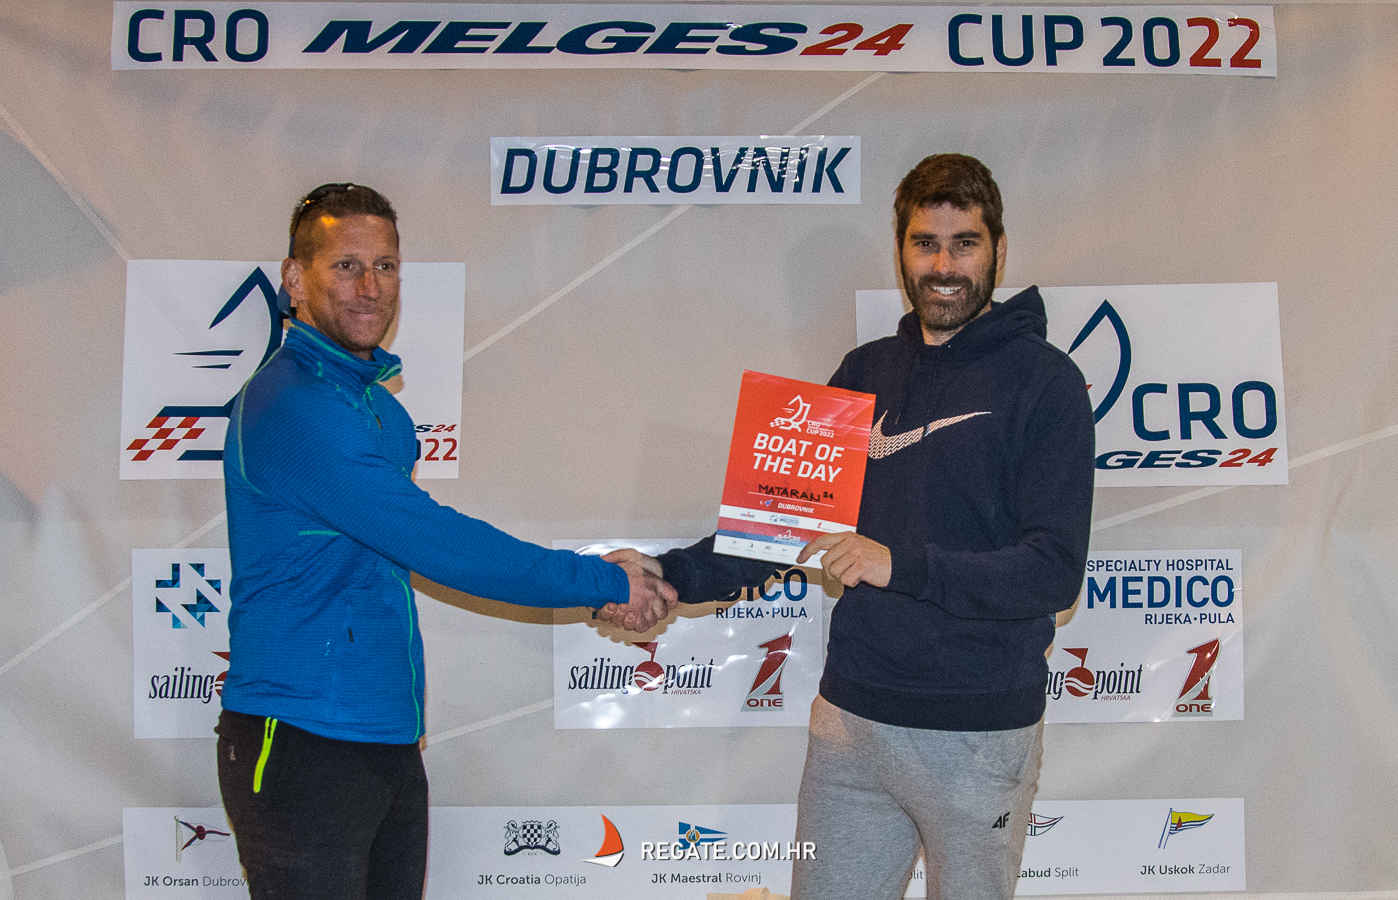 IMG_1261 - CRO Melges 24 Cup Dubrovnik - nedjelja